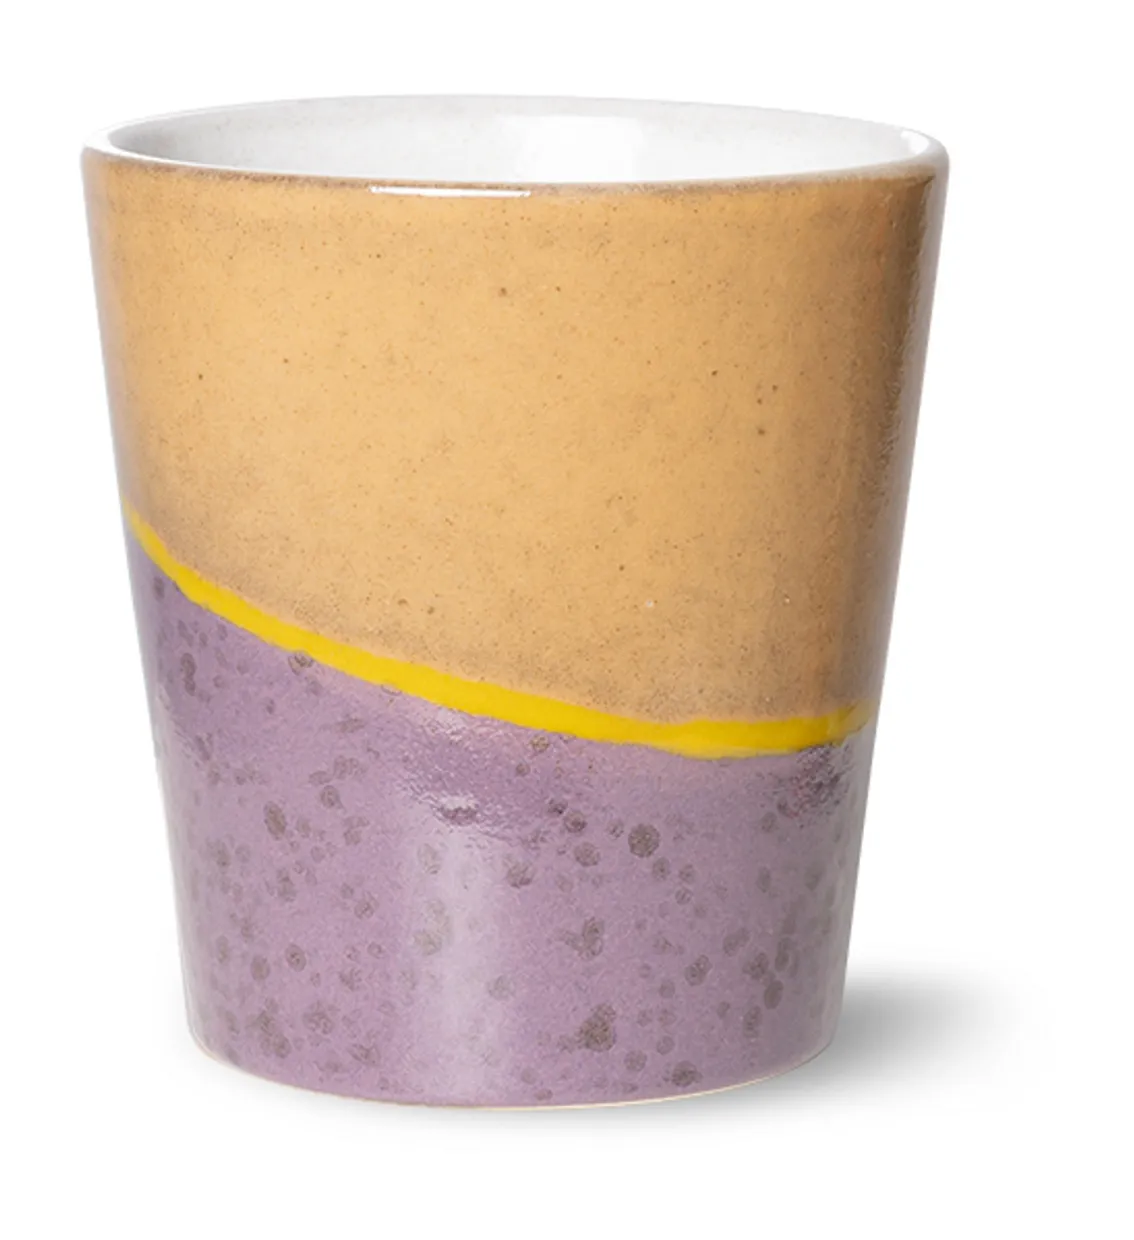 70s ceramics: coffee mug, gravity